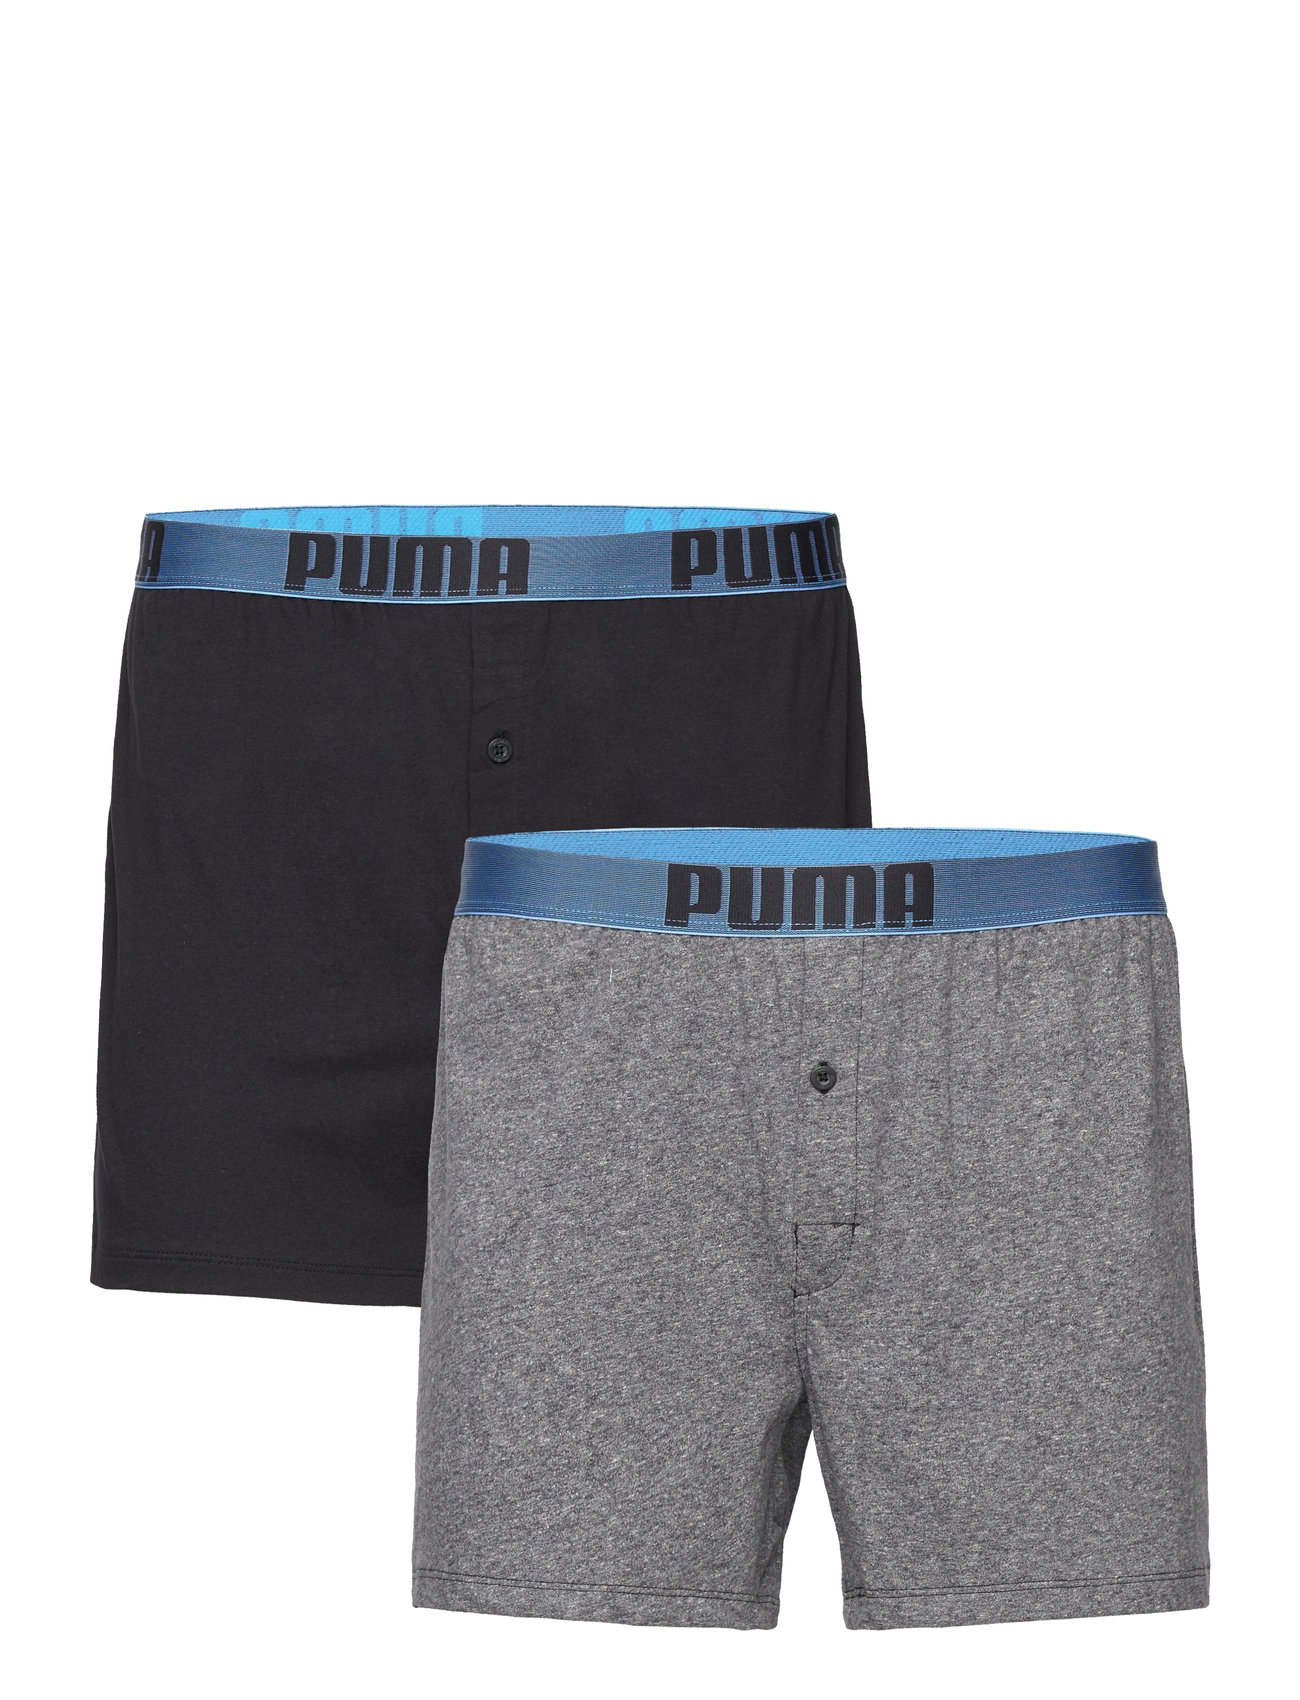 Loose Boxer Puma Fit - PUMA 2p Underpants Jersey Men